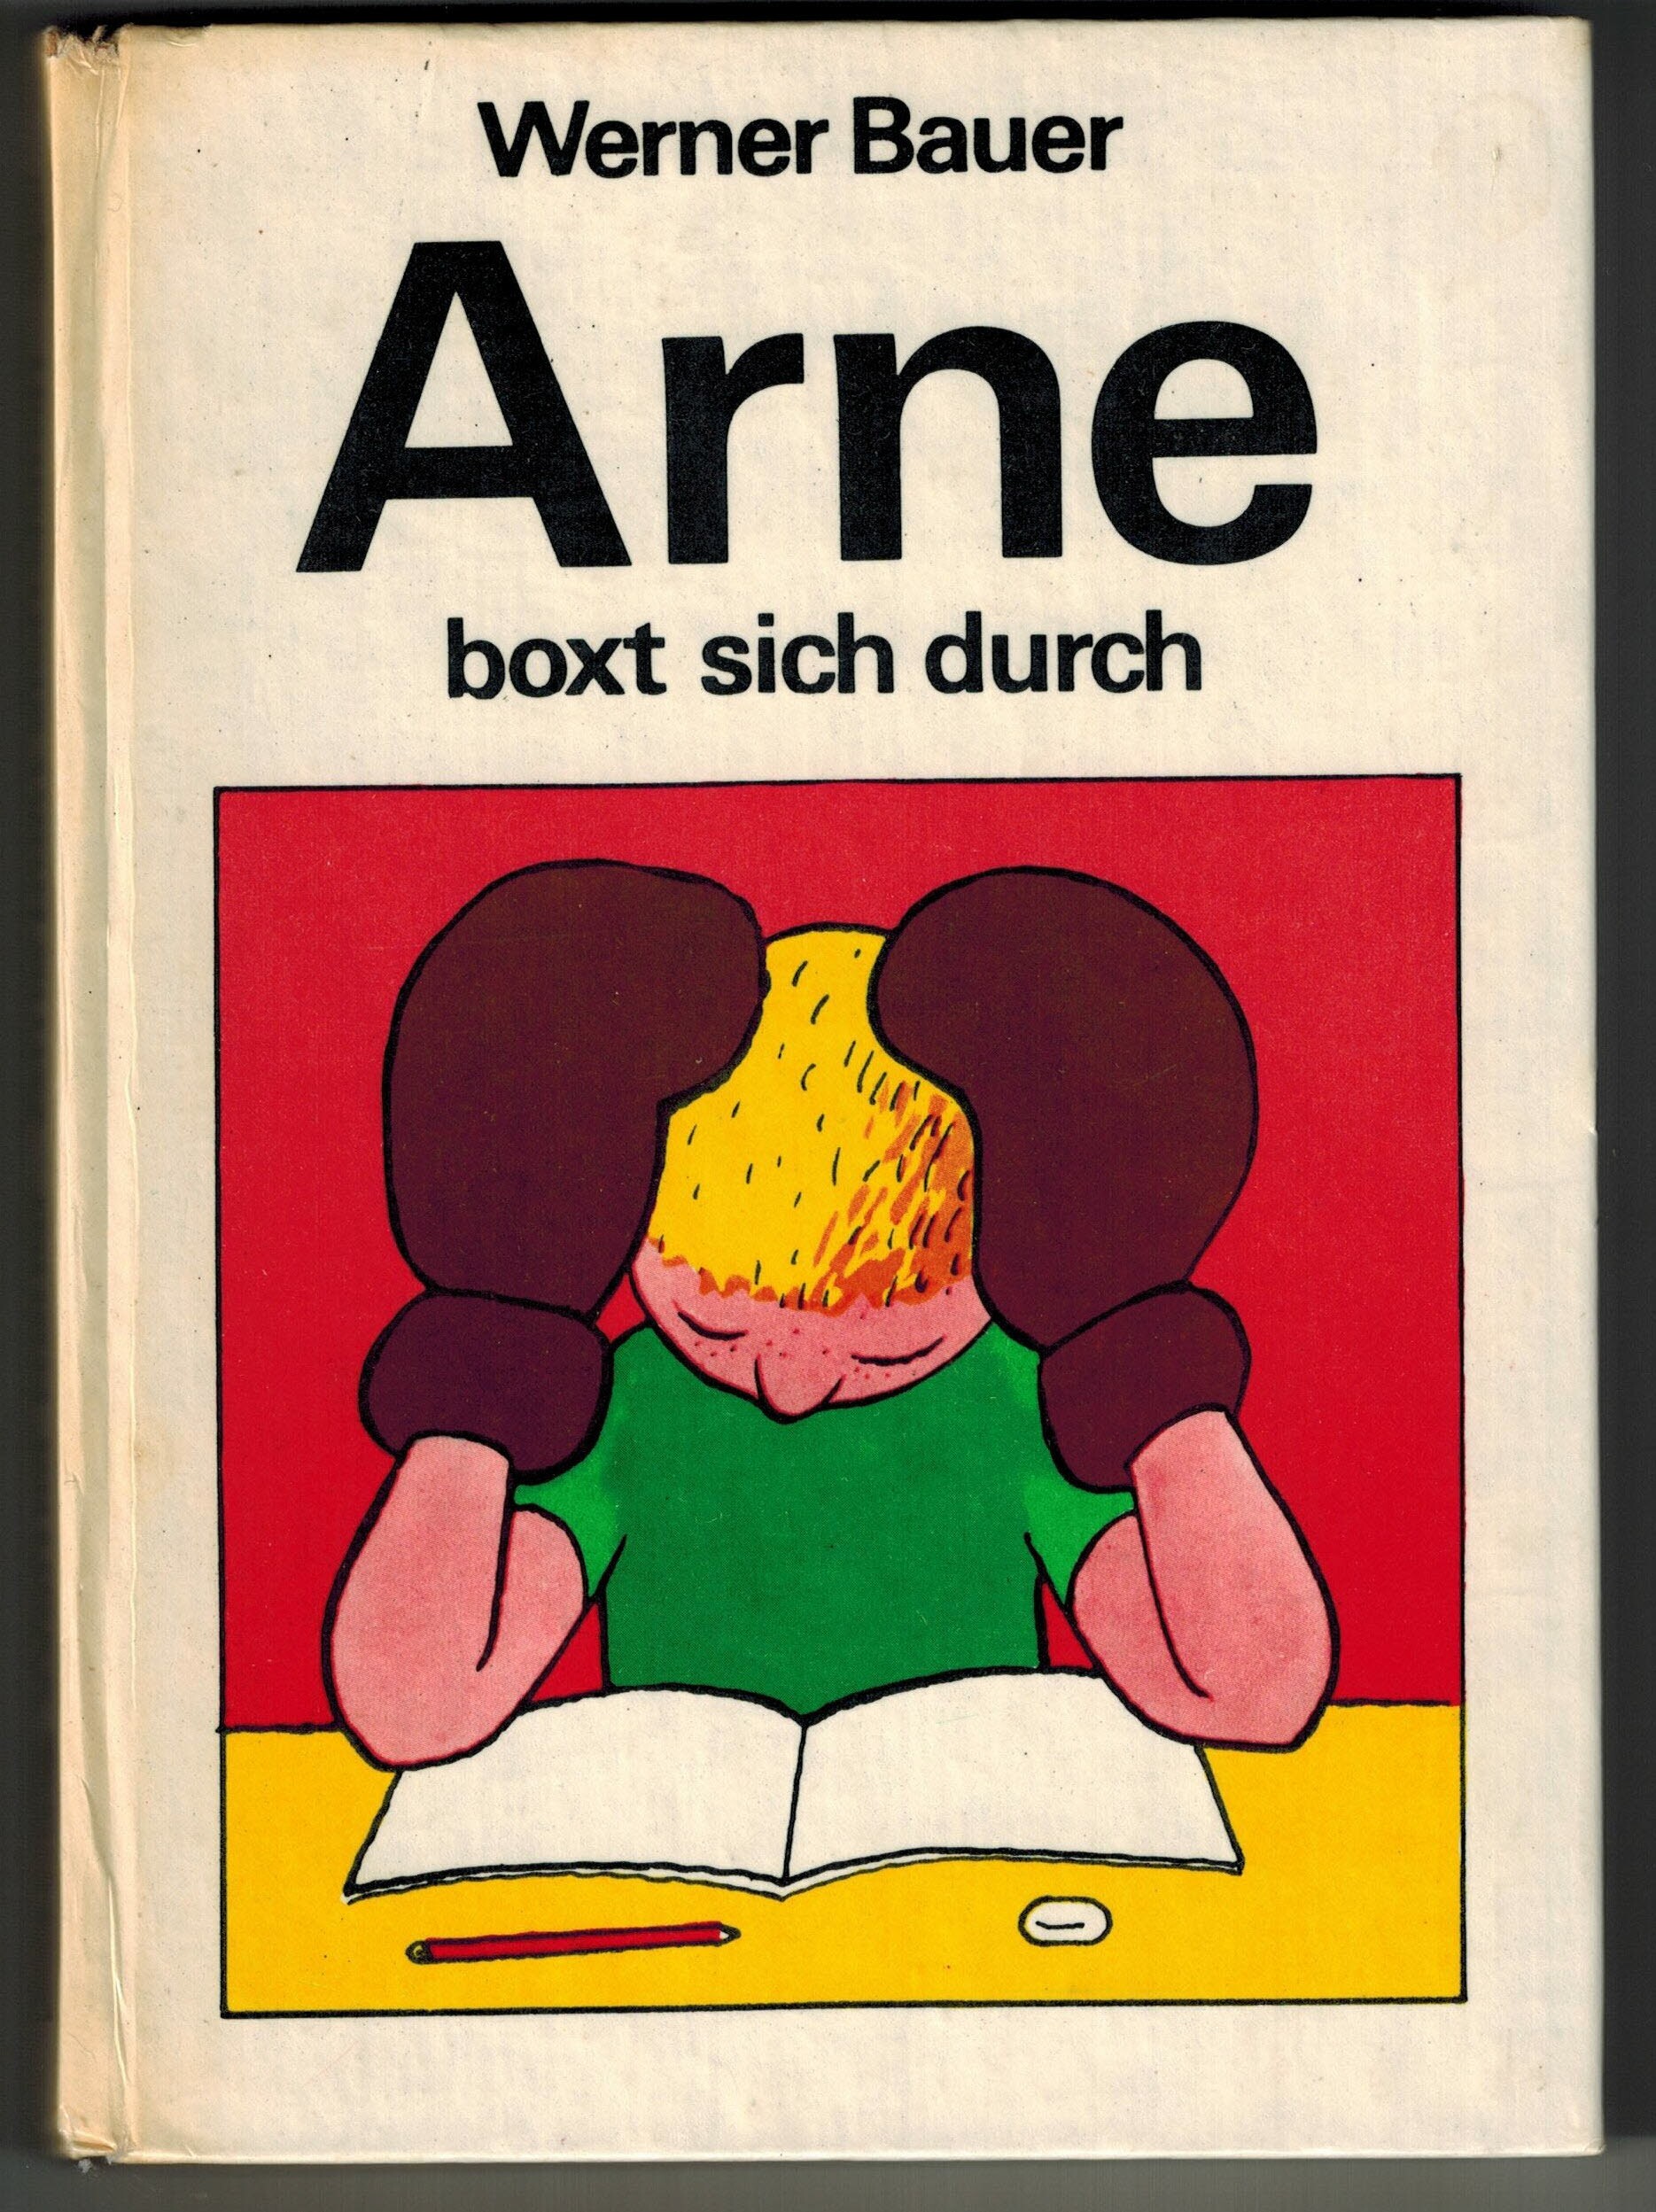 Arne boxt sich durch (Dezentrale Sammlung Deutsches Kampfsportmuseum e. V. CC BY-NC-SA)